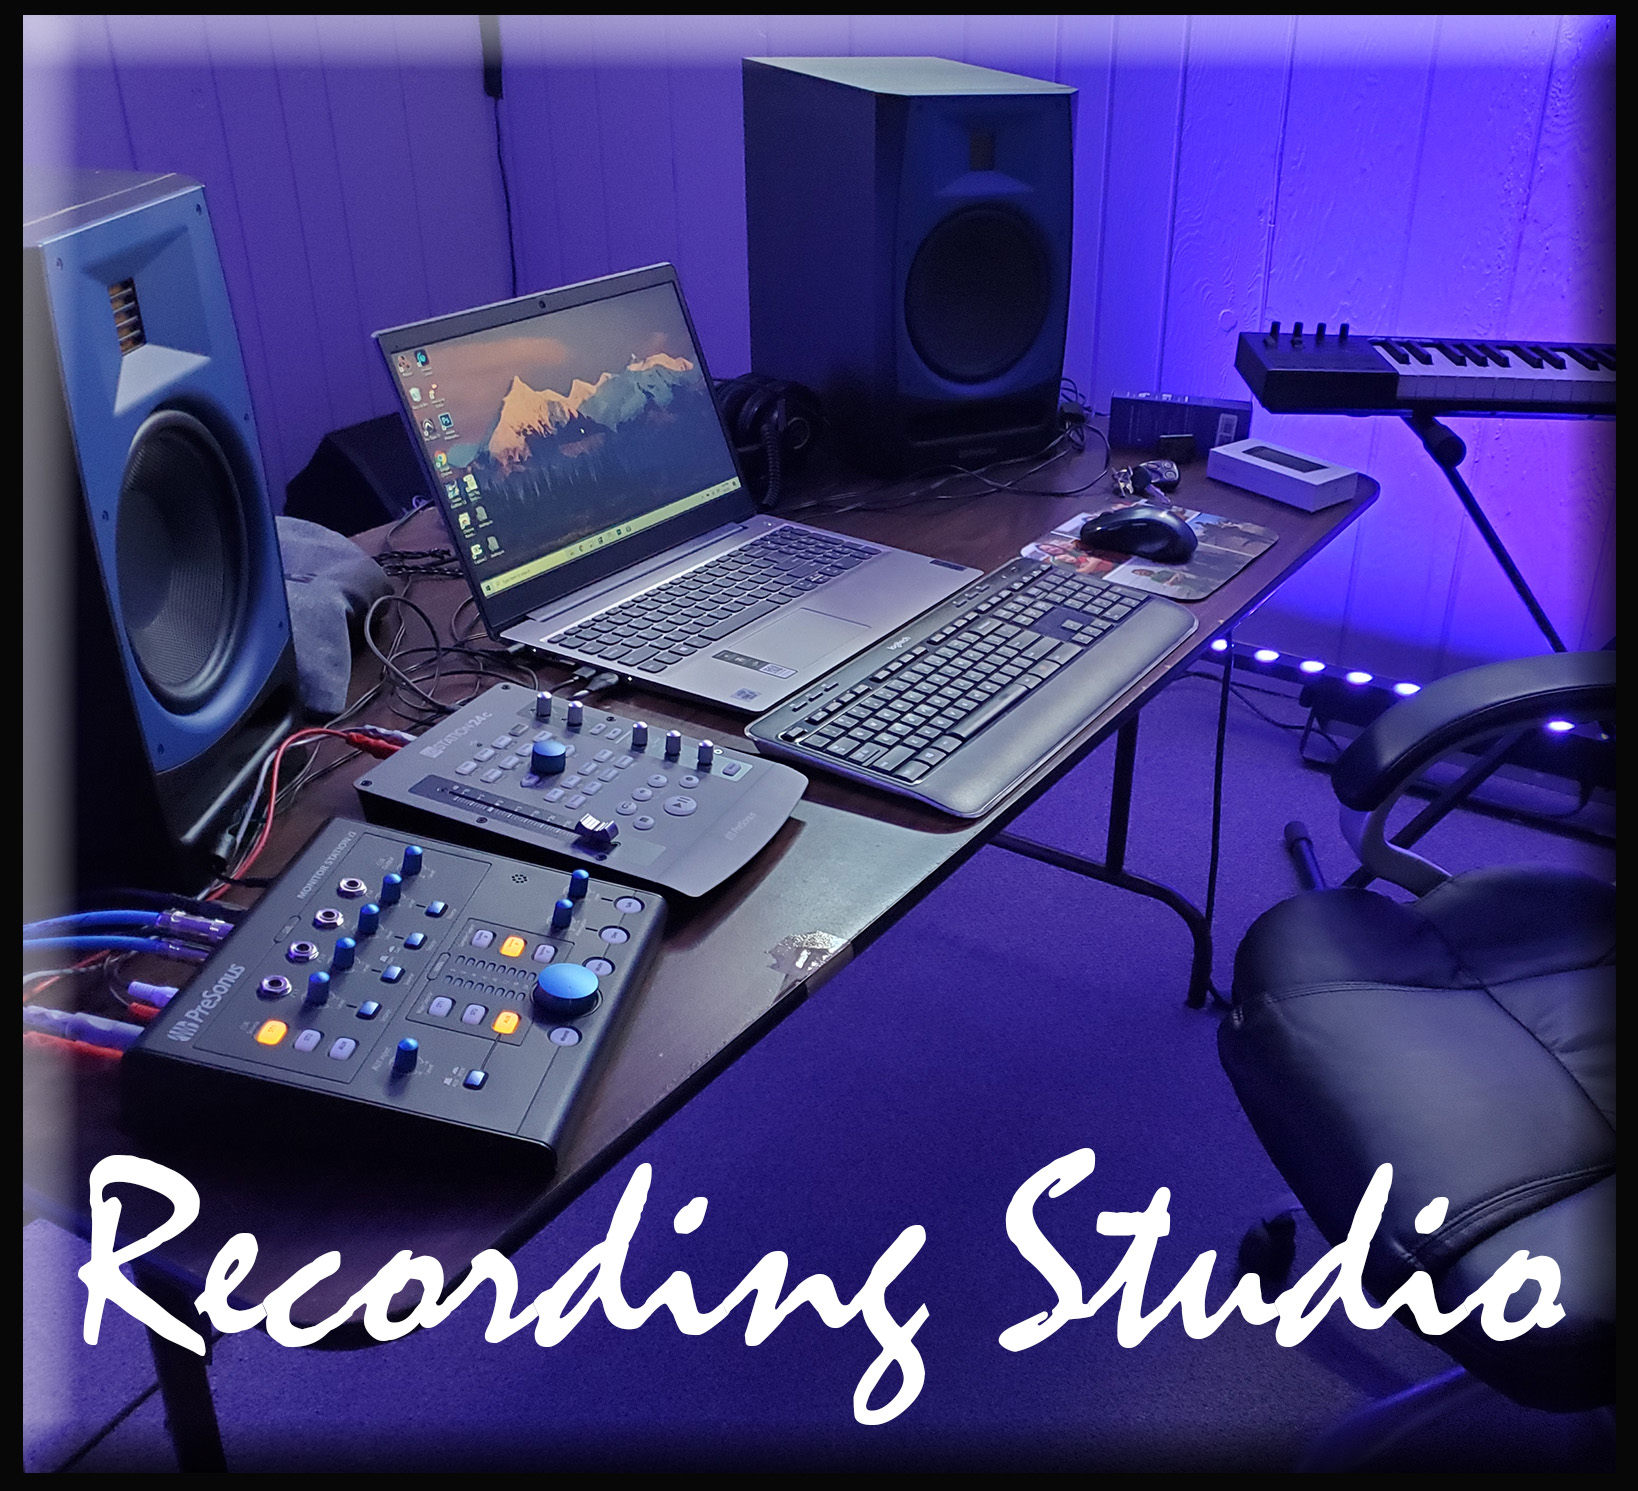 Recording Stewdio!